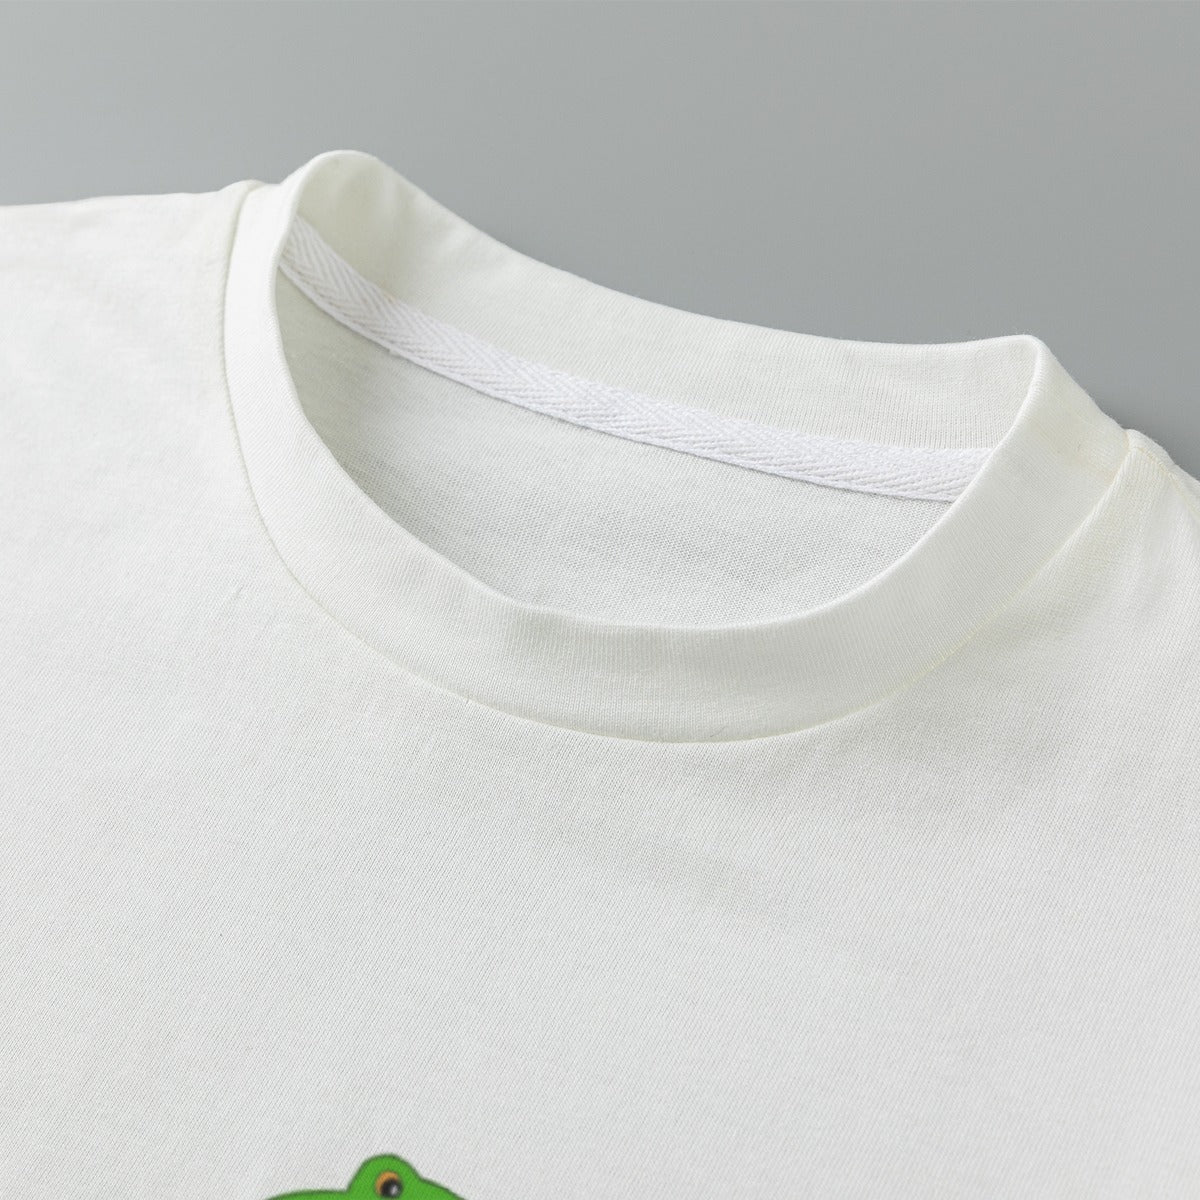 Boys Big Brother Short-Sleeve T-Shirt 100% Cotton